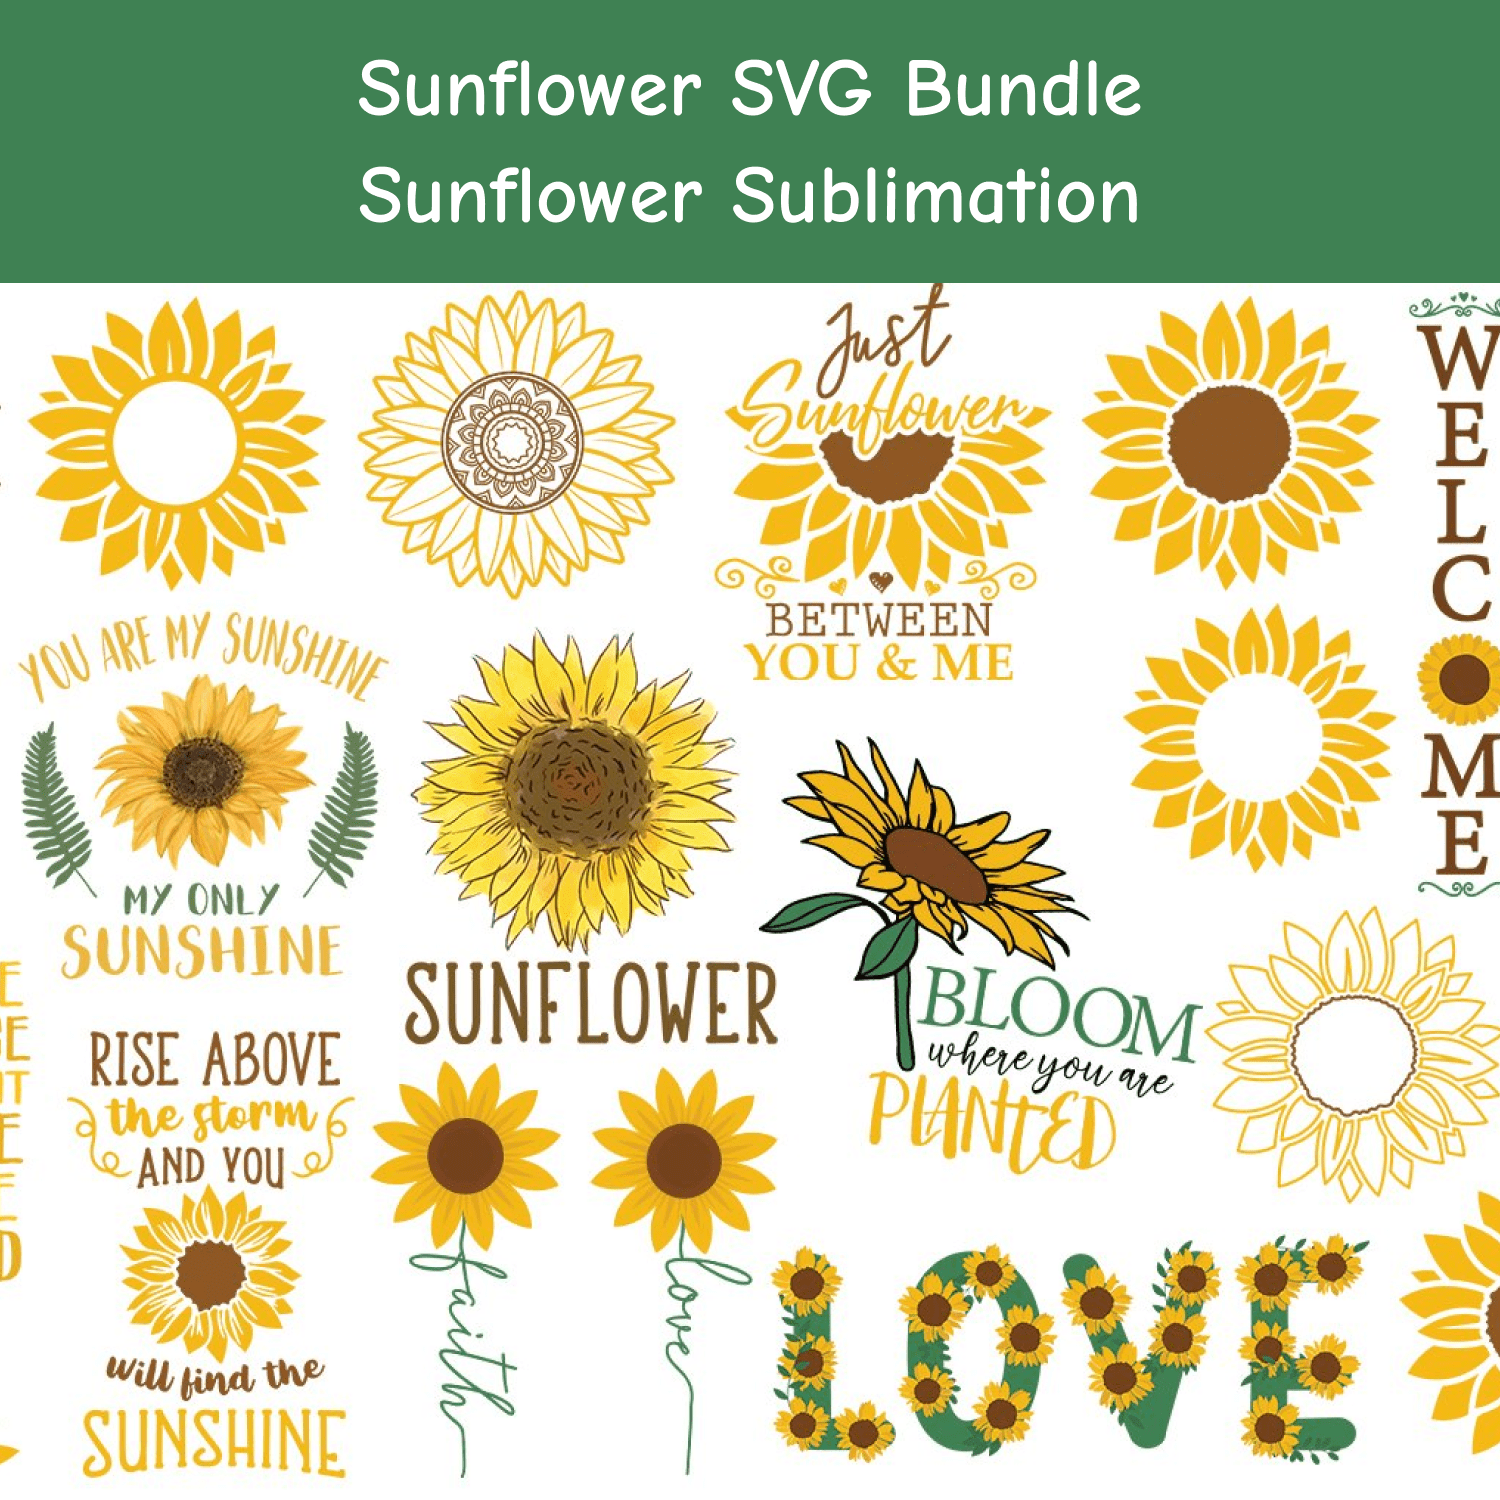 Sunflower SVG Bundle, Sunflower Sublimation cover.